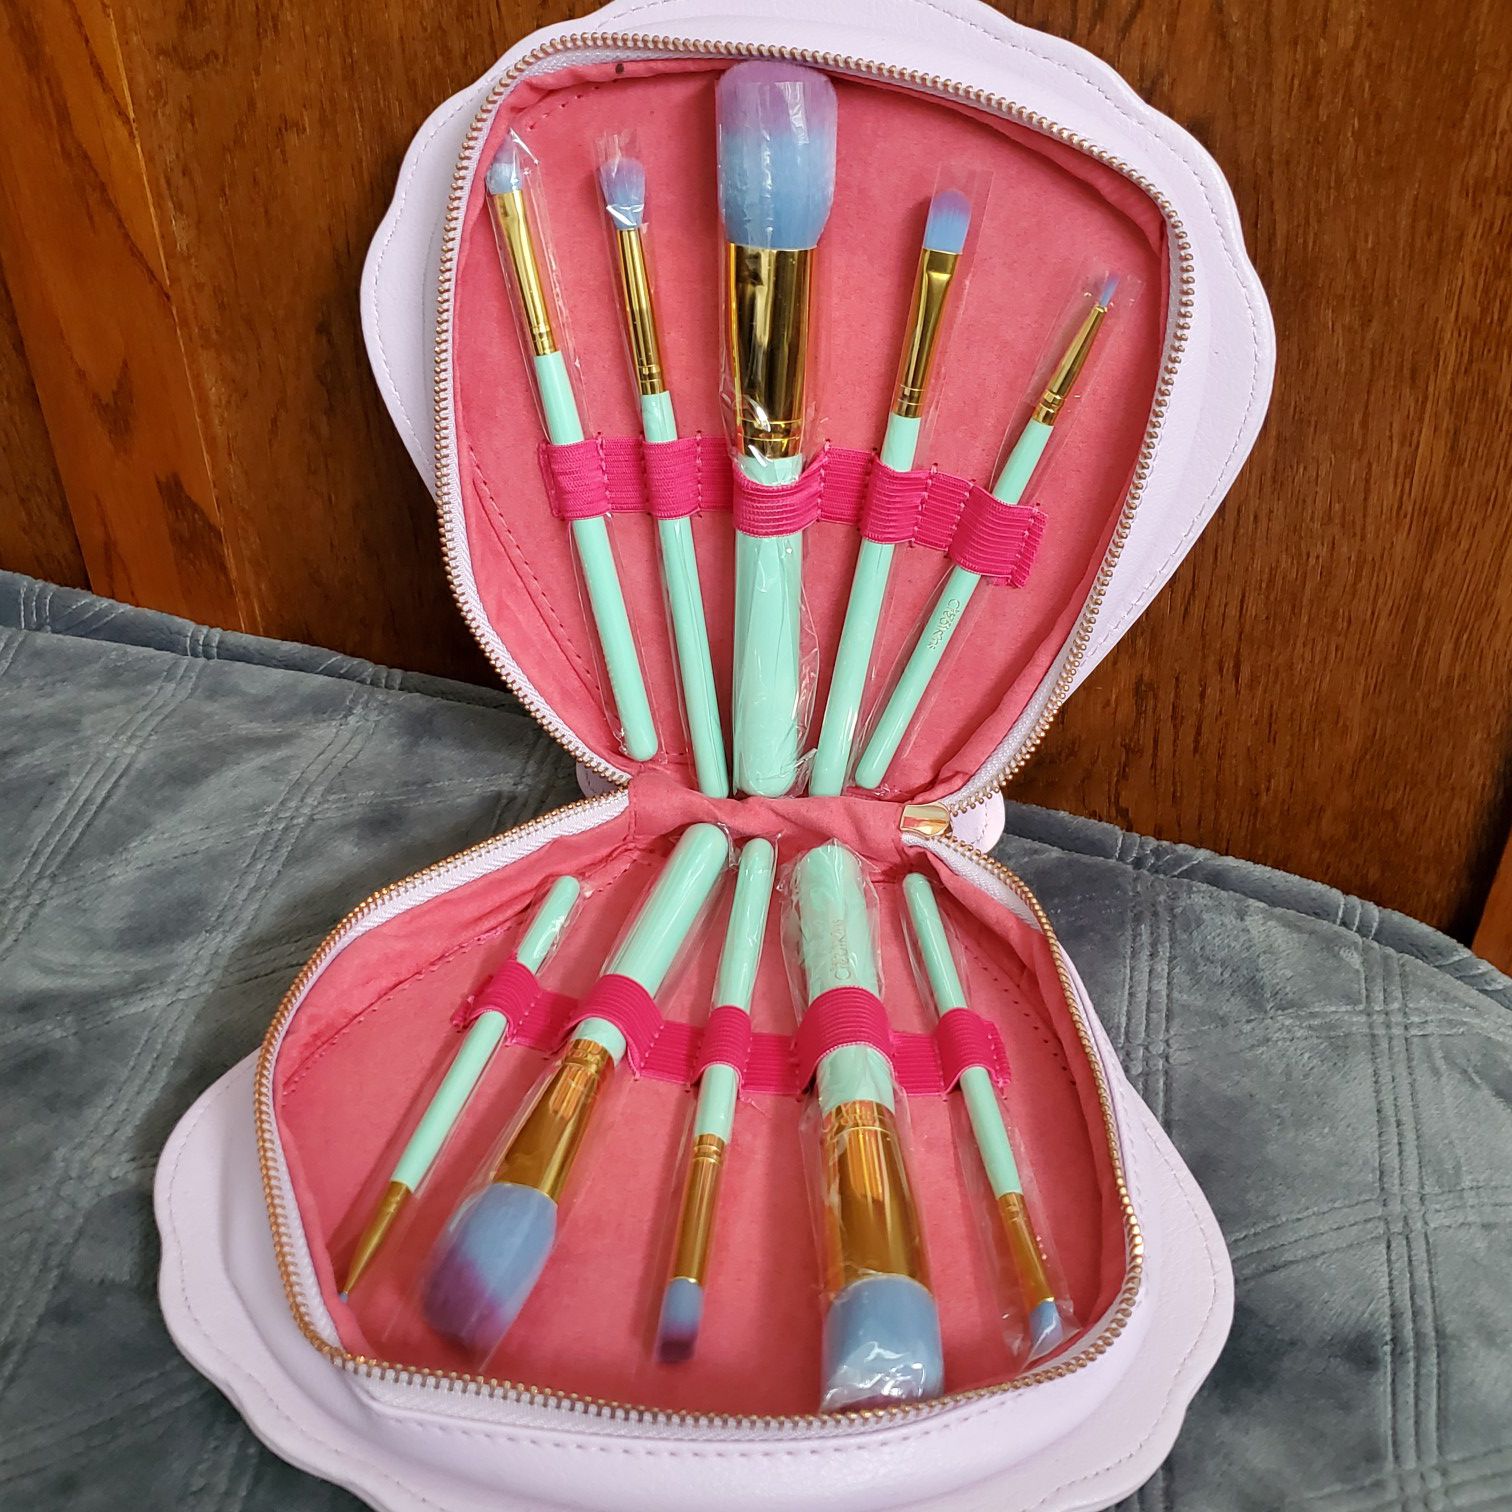 Beauty Creations 10 pc Makeup Brush Set